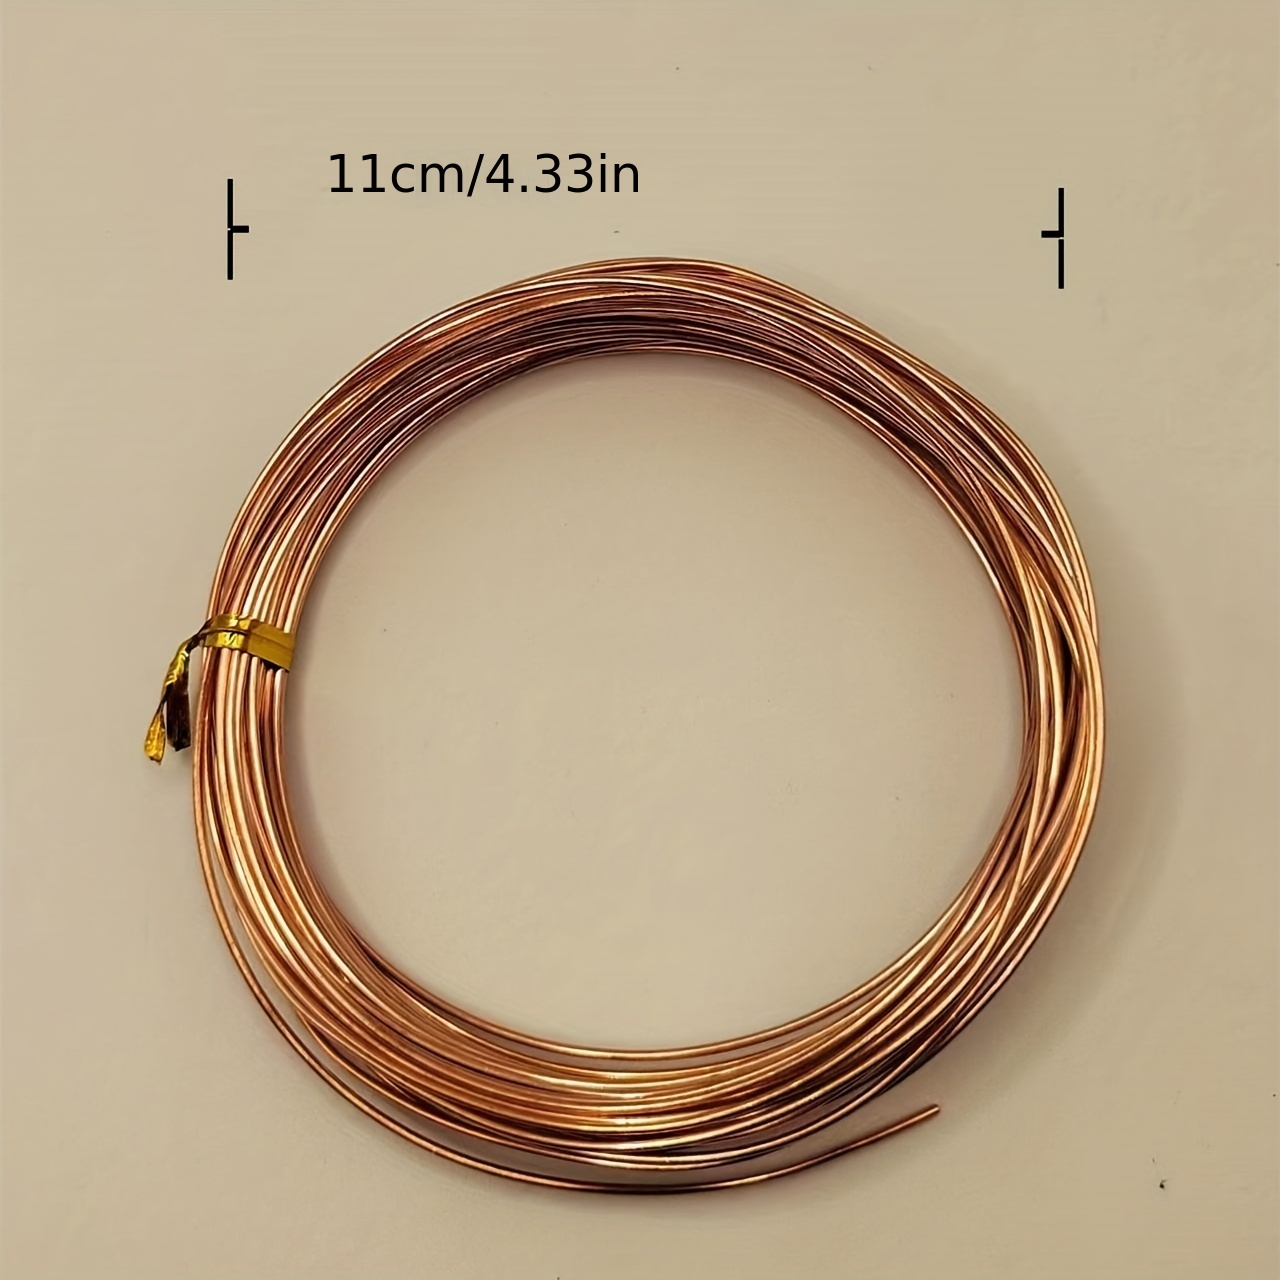 99.9% Soft Copper Wire, 12 Gauge/2mm Diameter 59 Feet/18m 1.1 Pound Spool